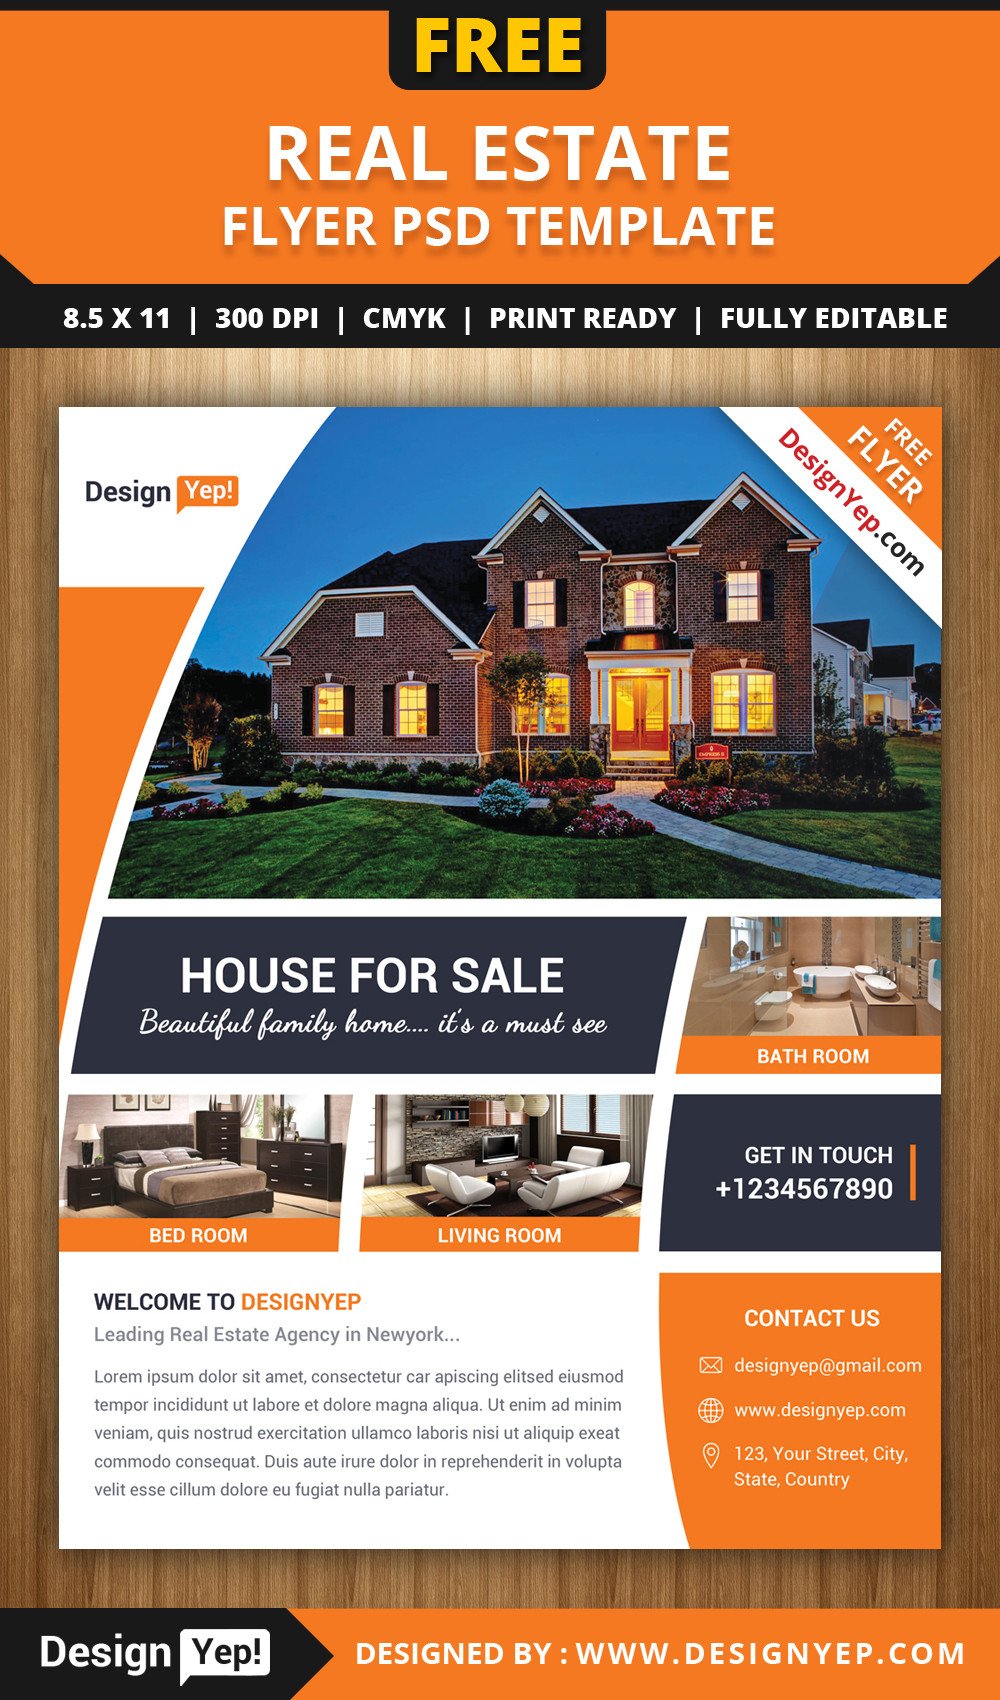 Free Real Estate Flyer PSD Template DesignYep